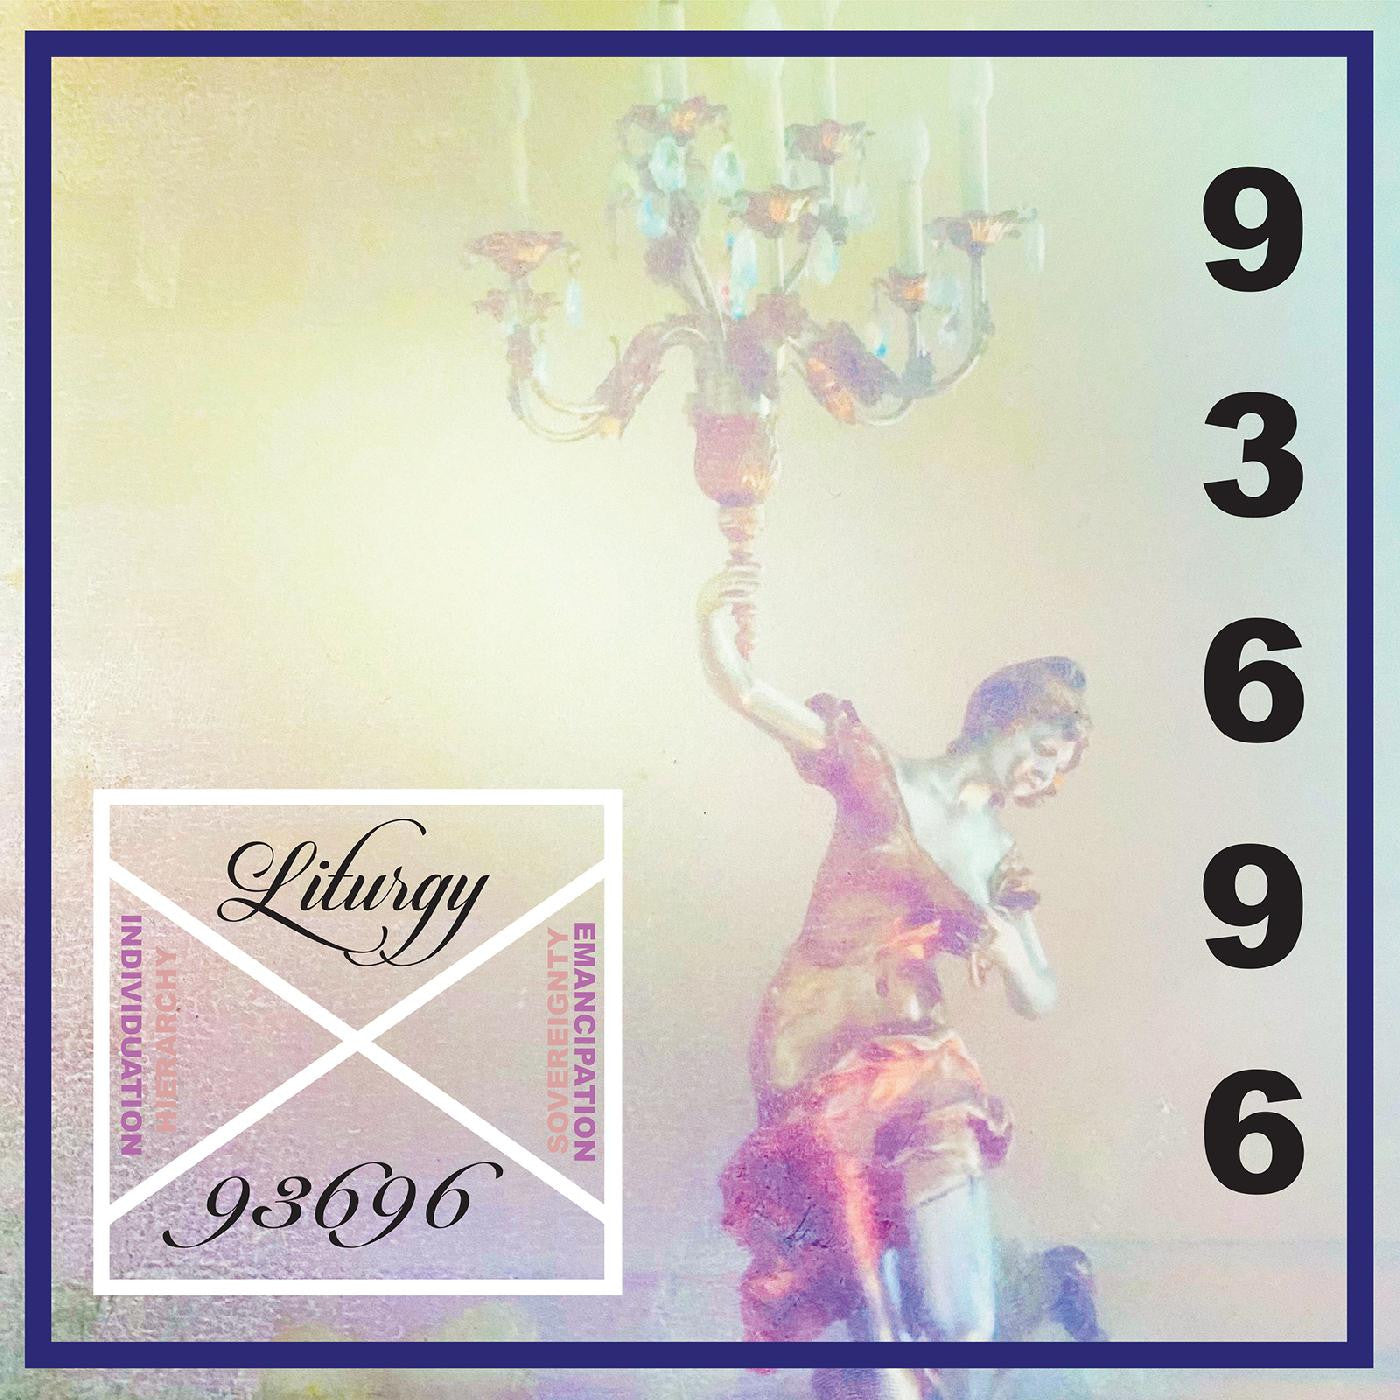 Liturgy - 93696 - Indie LP